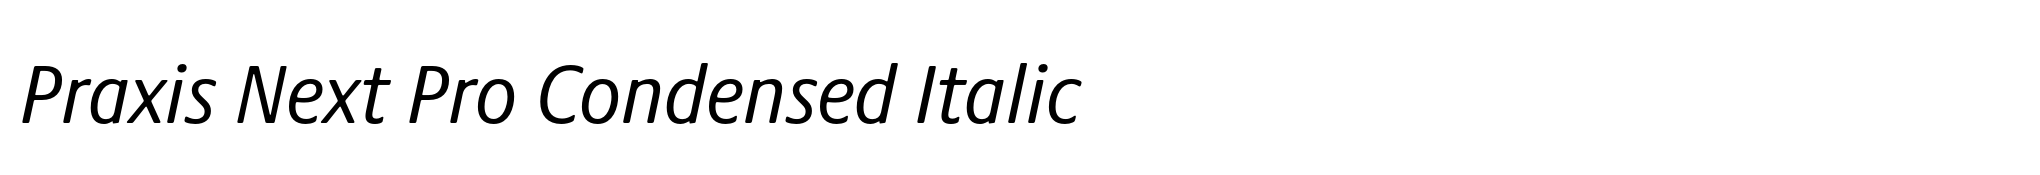 Praxis Next Pro Condensed Italic image